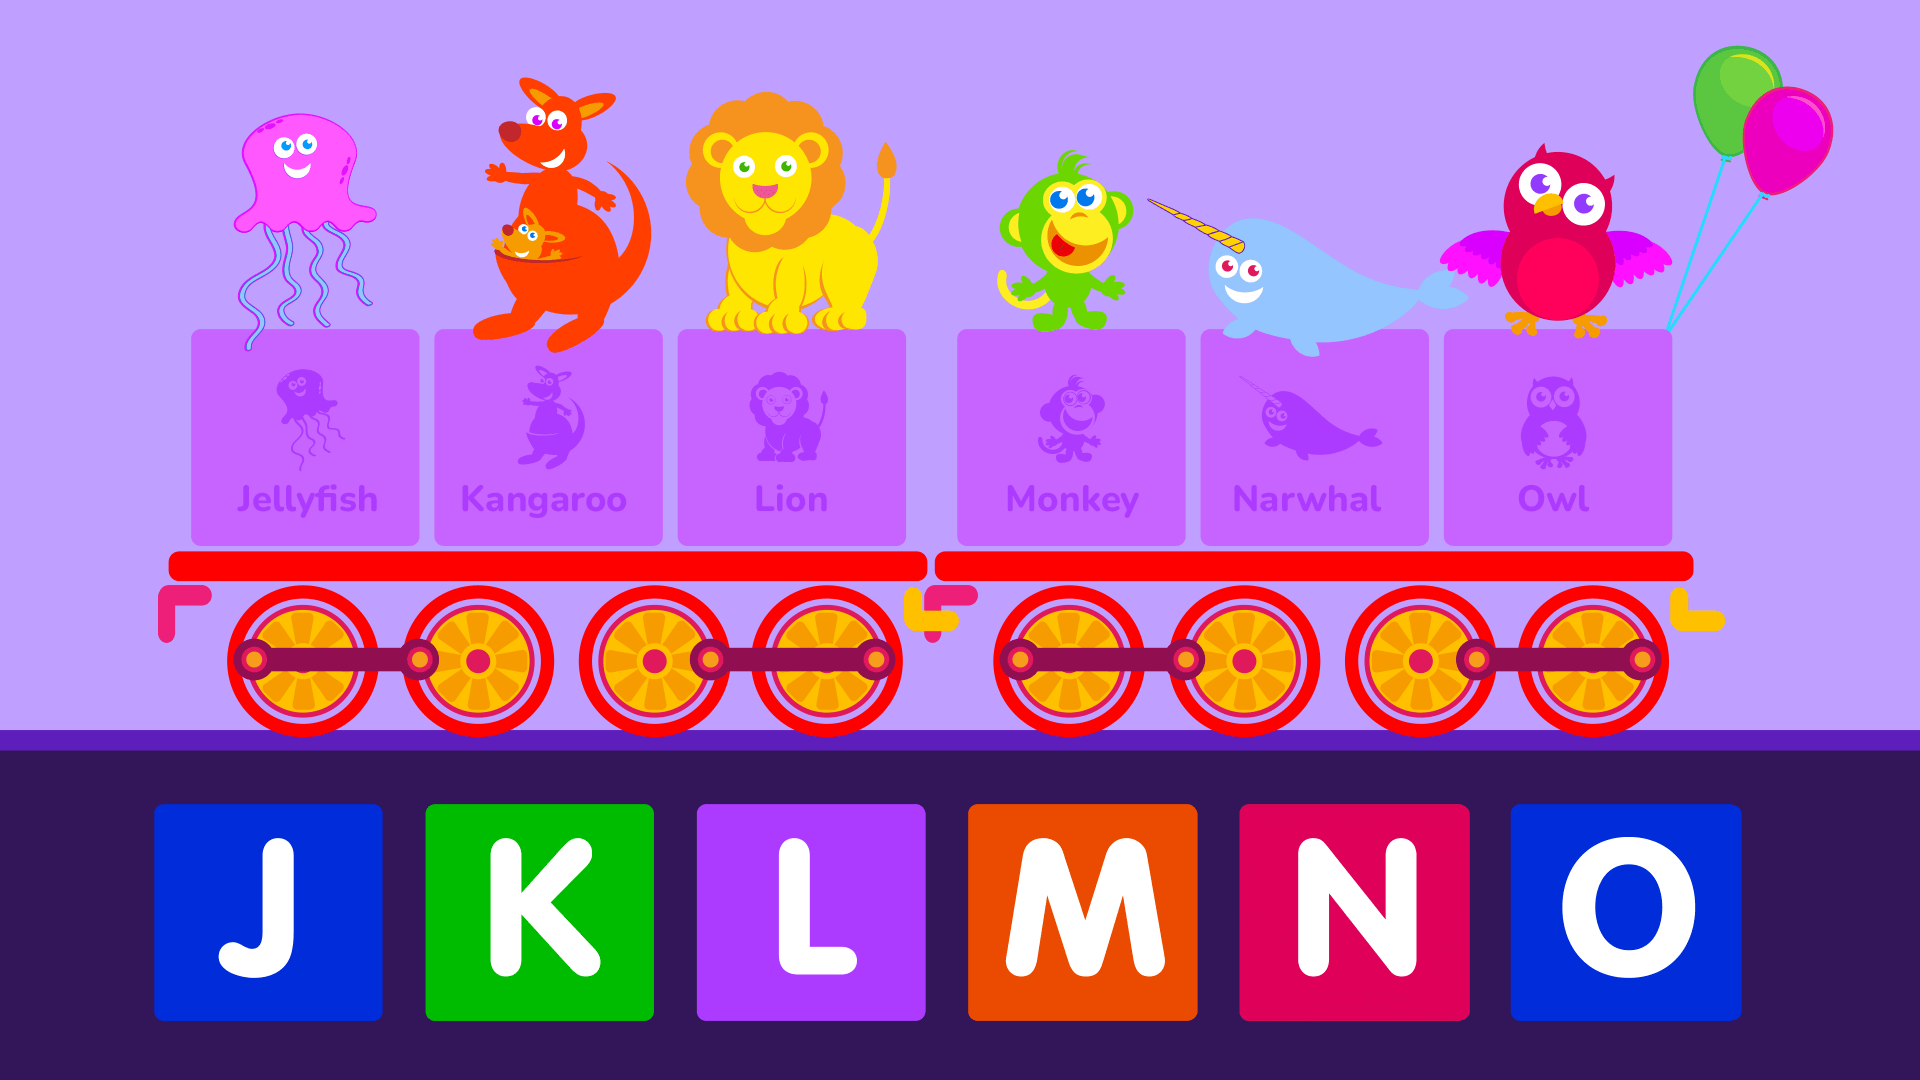 The Alphabet Train game JKLMNO